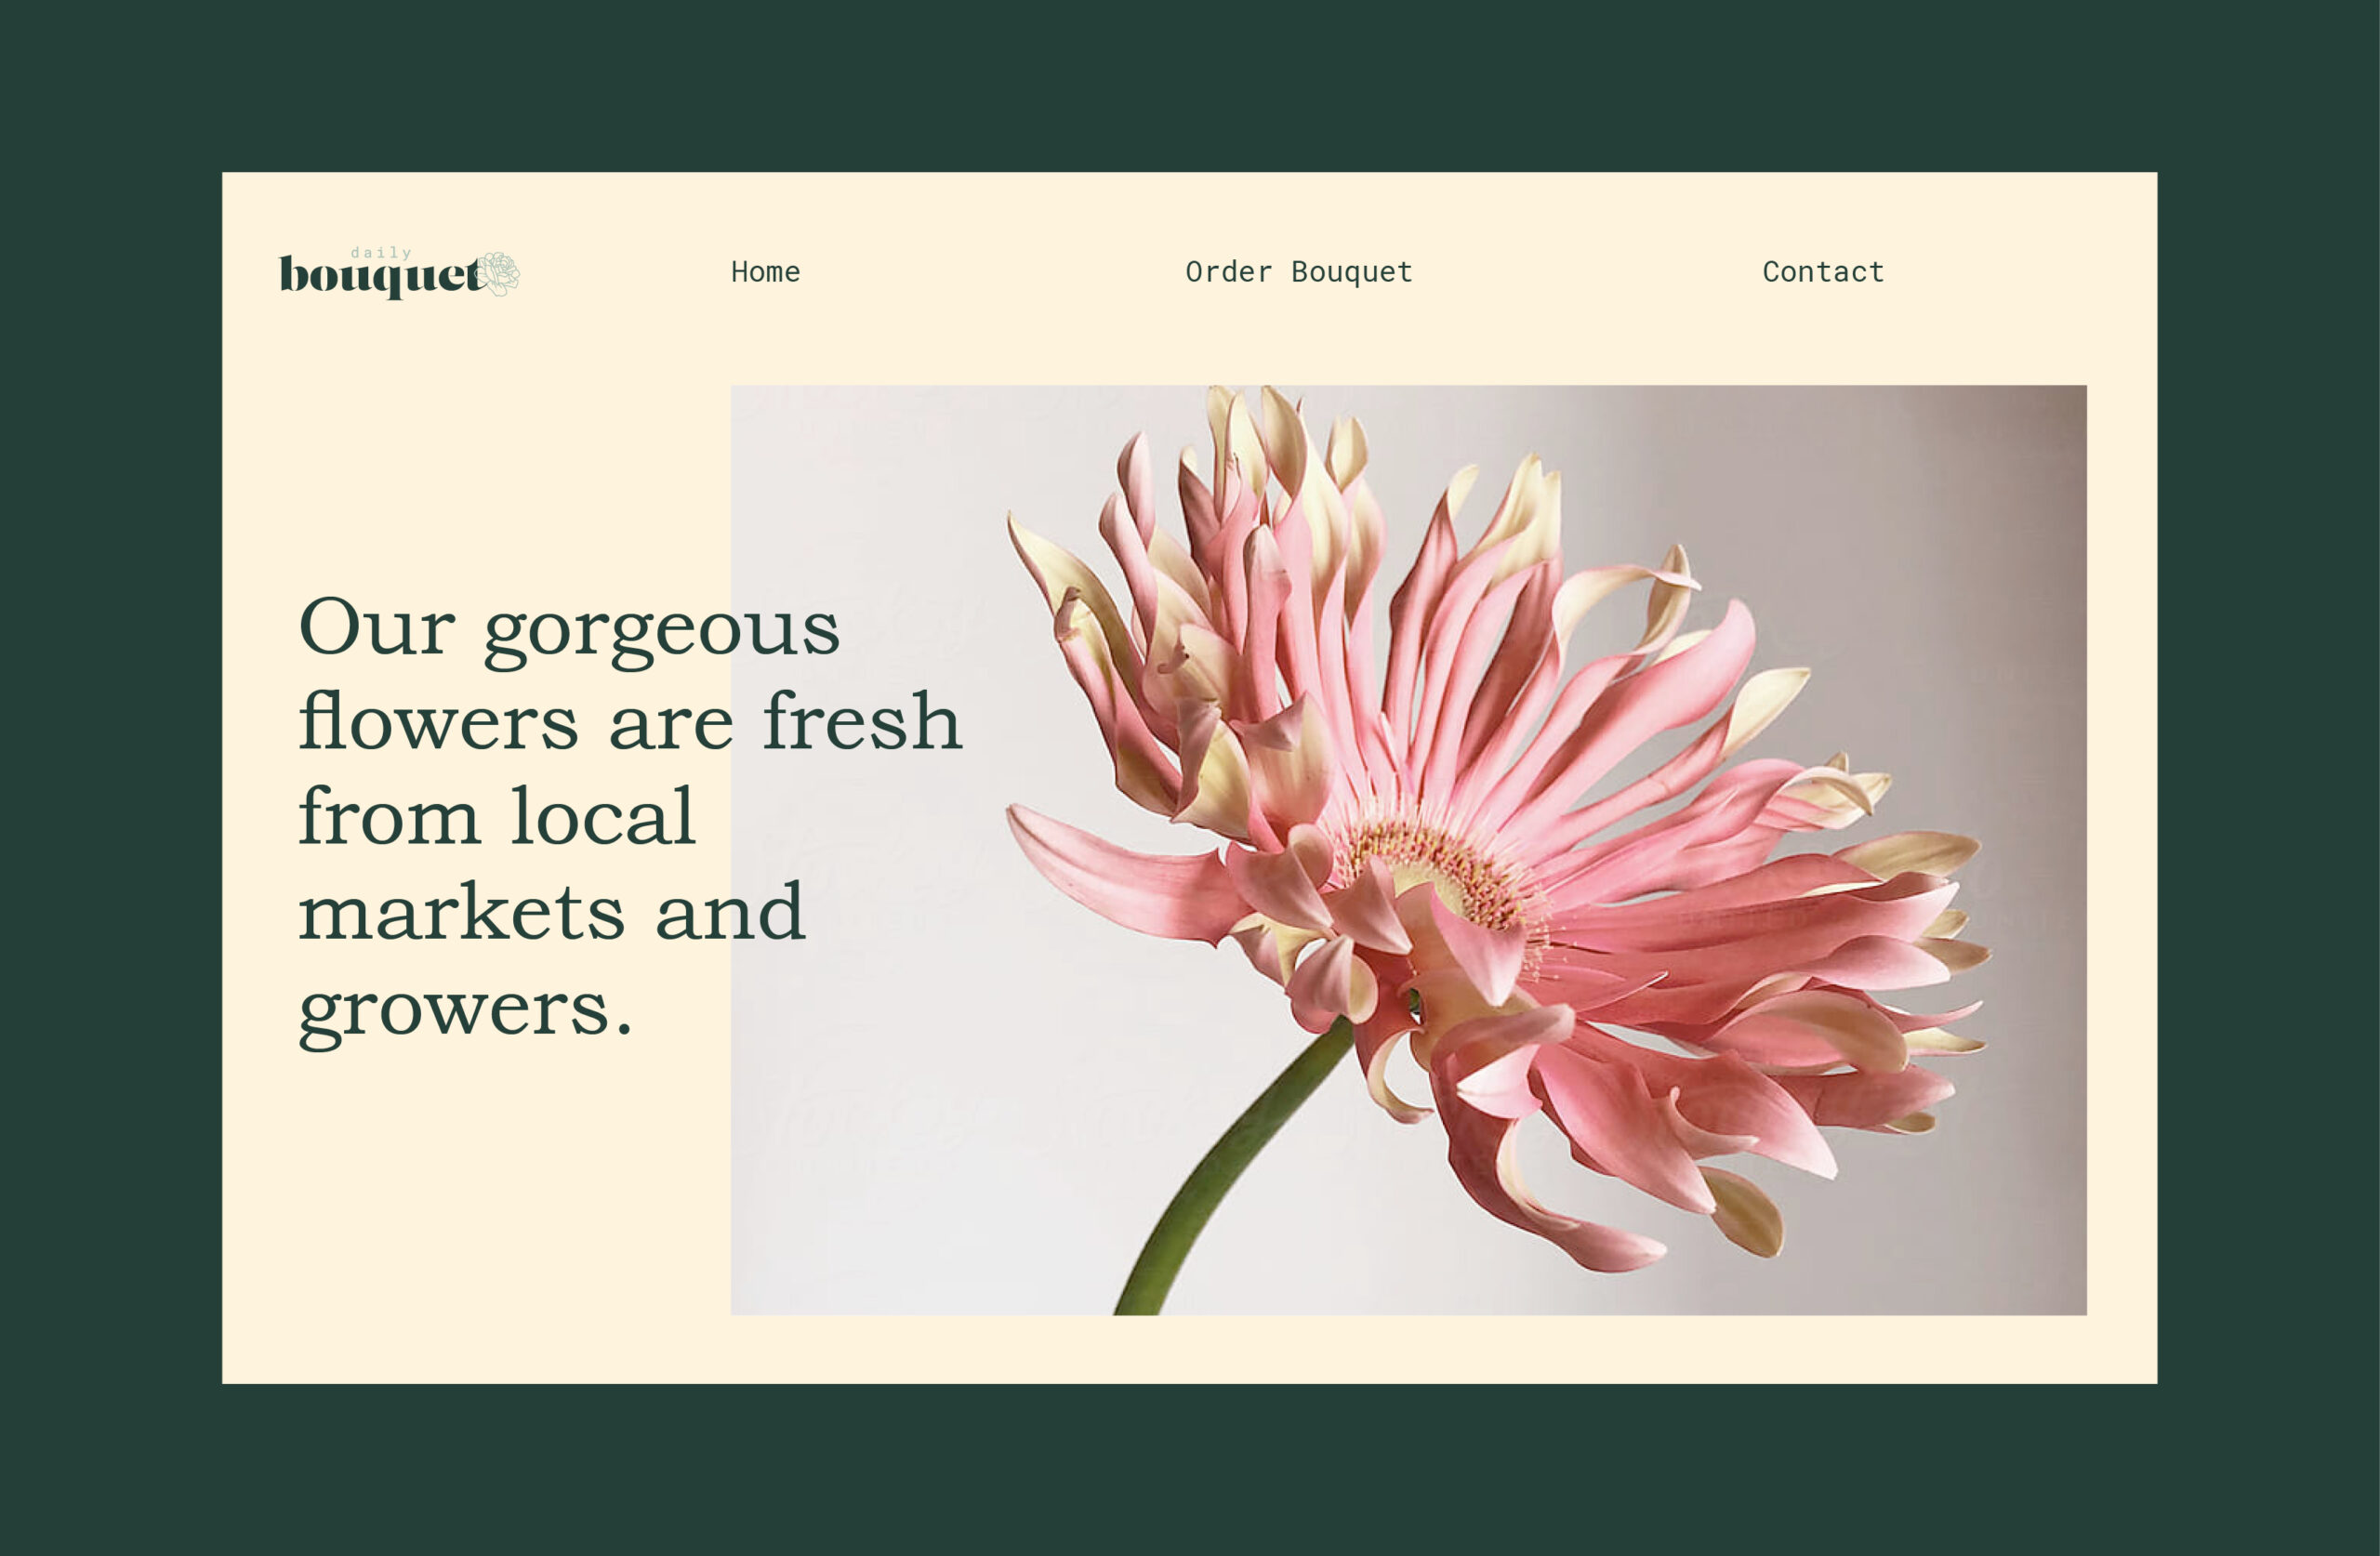 website layout designed for Daily Bouquet florist